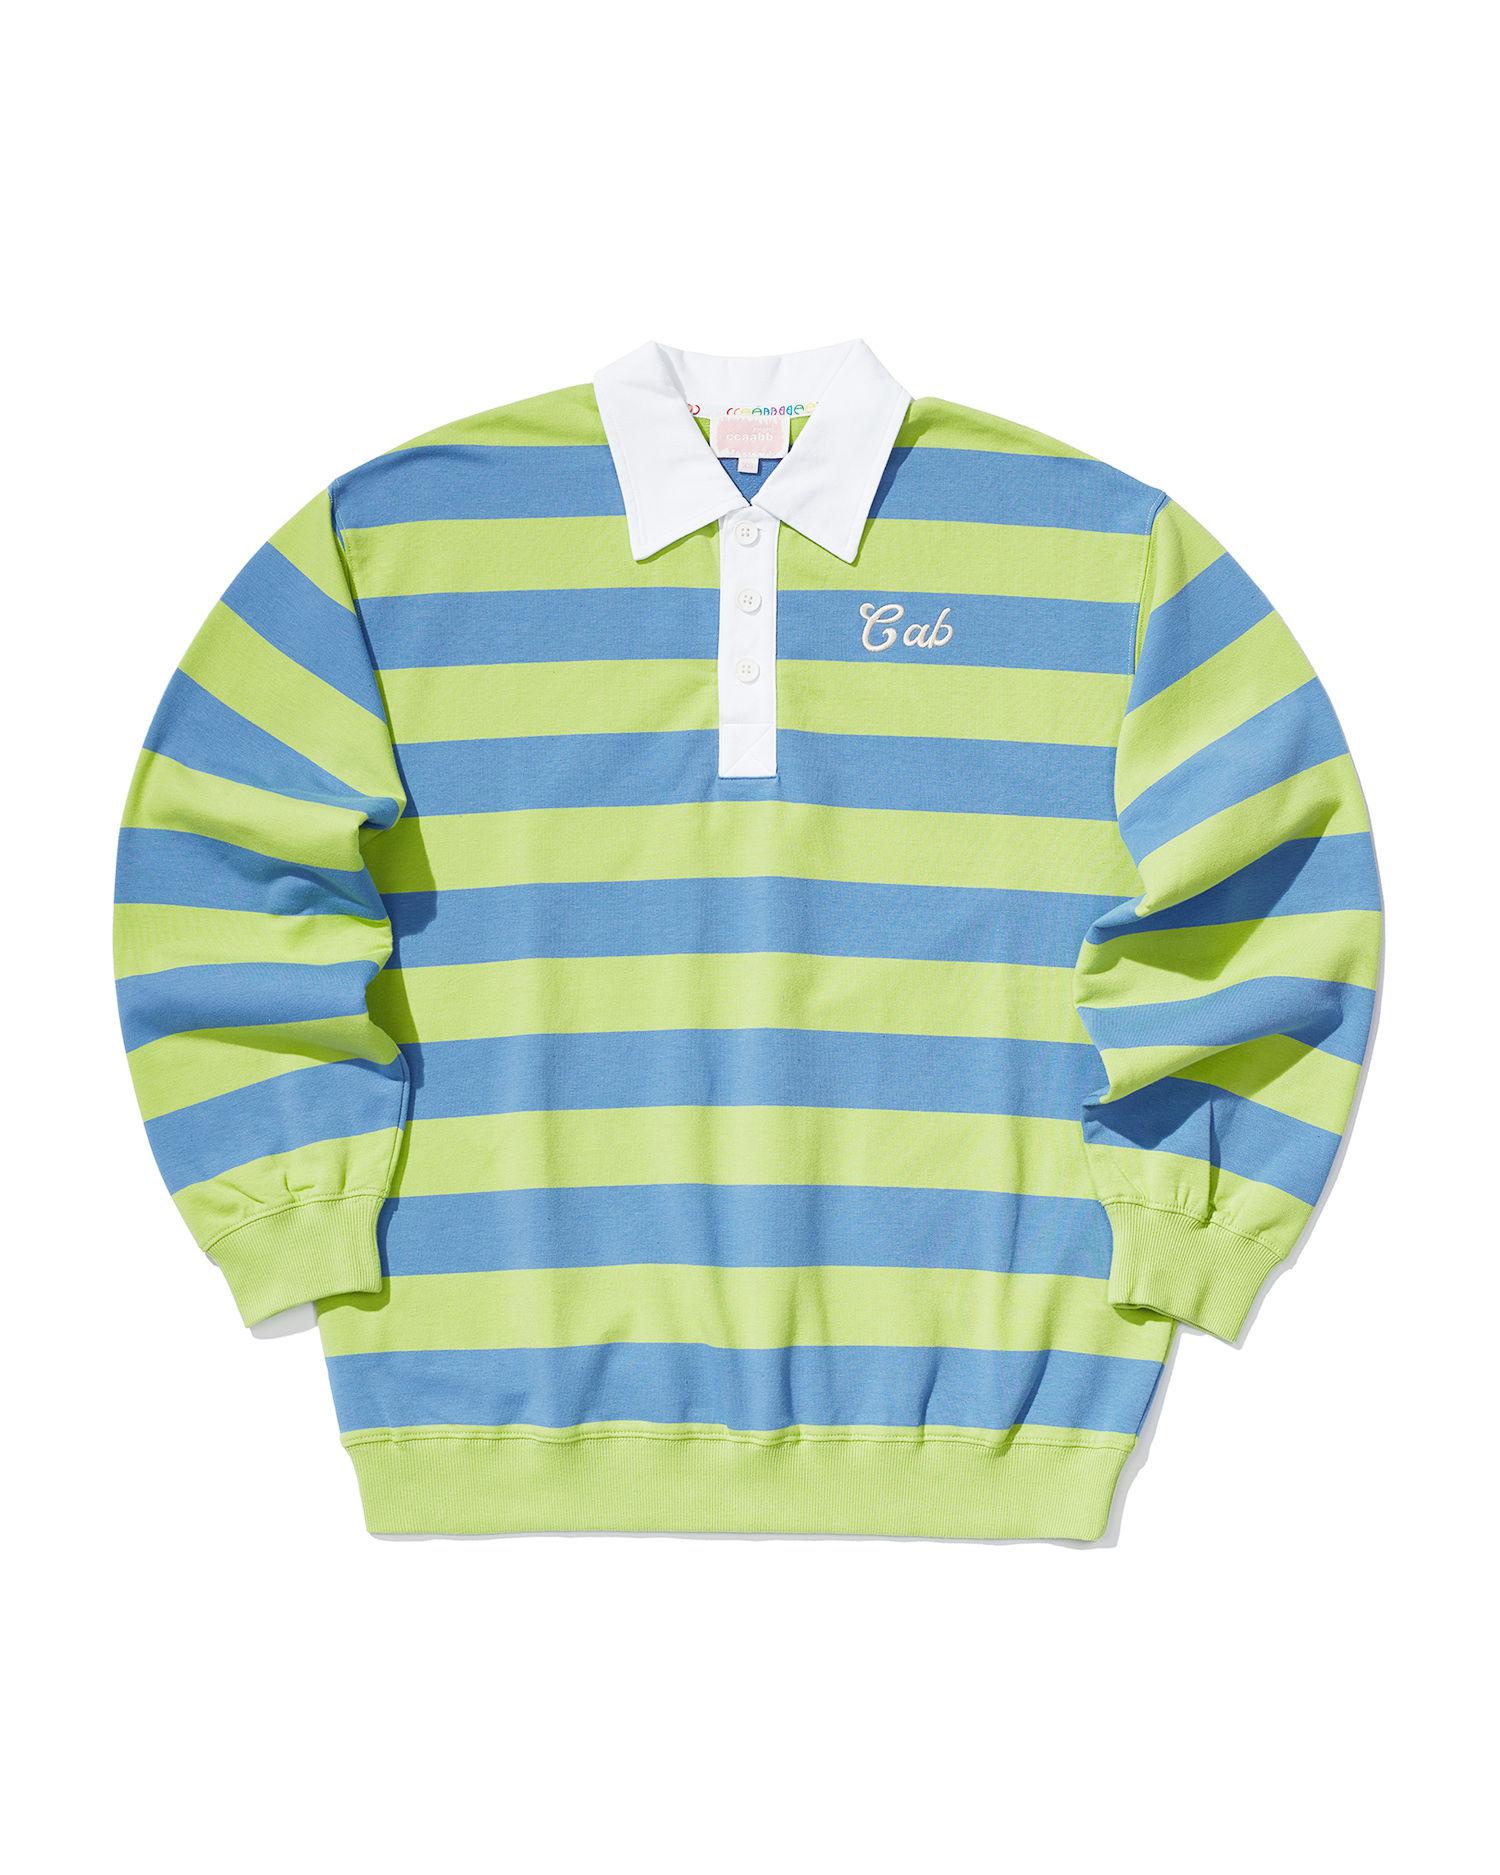 Striped polo sweatshirt by CCAABB